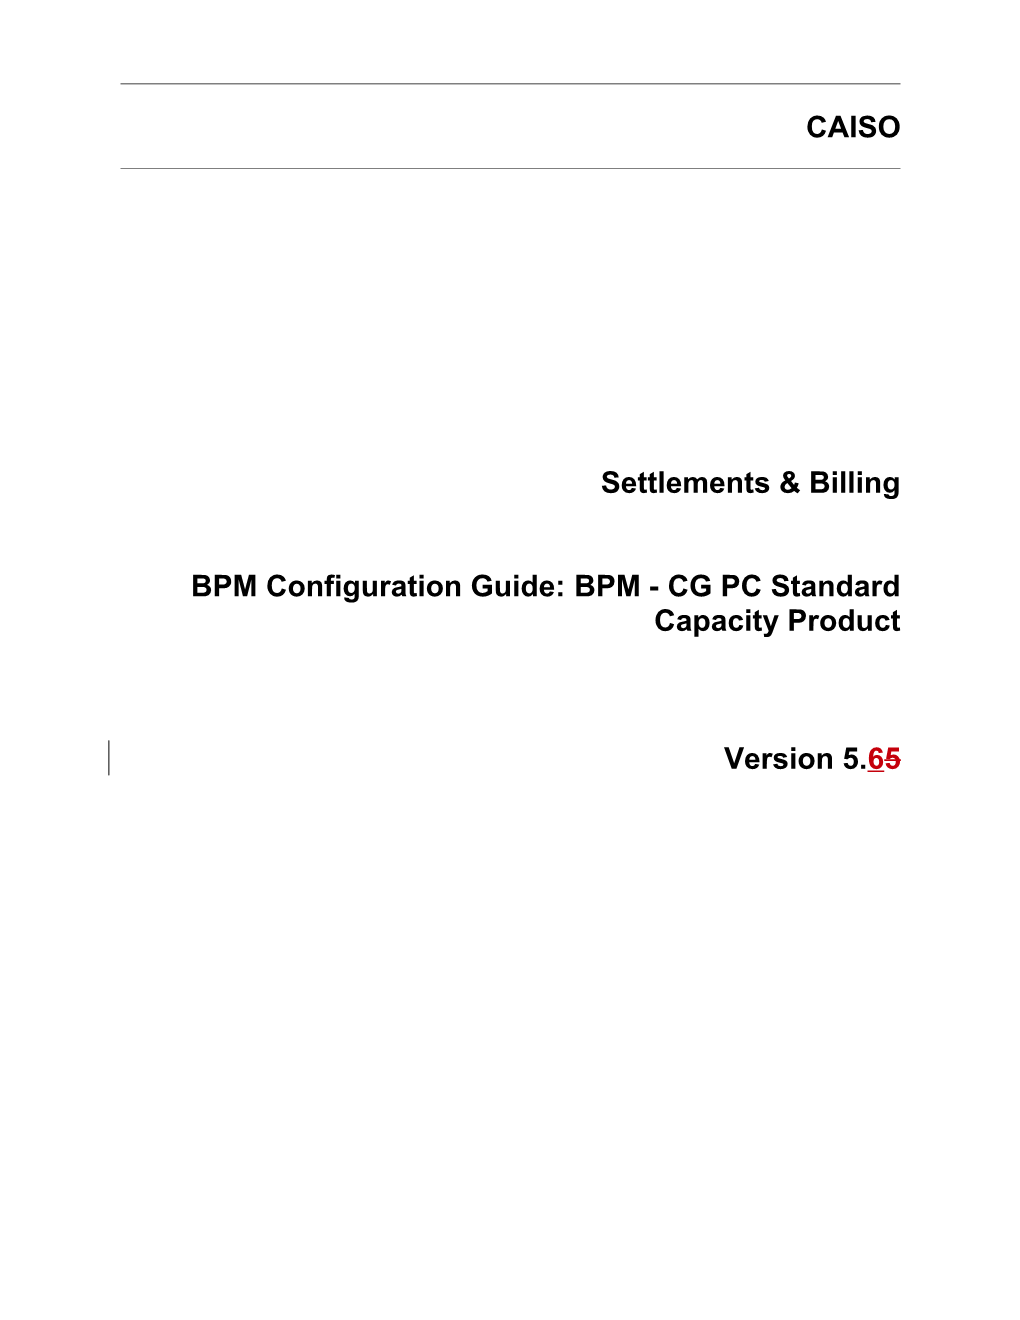 BPM - CG PC Standard Capacity Product